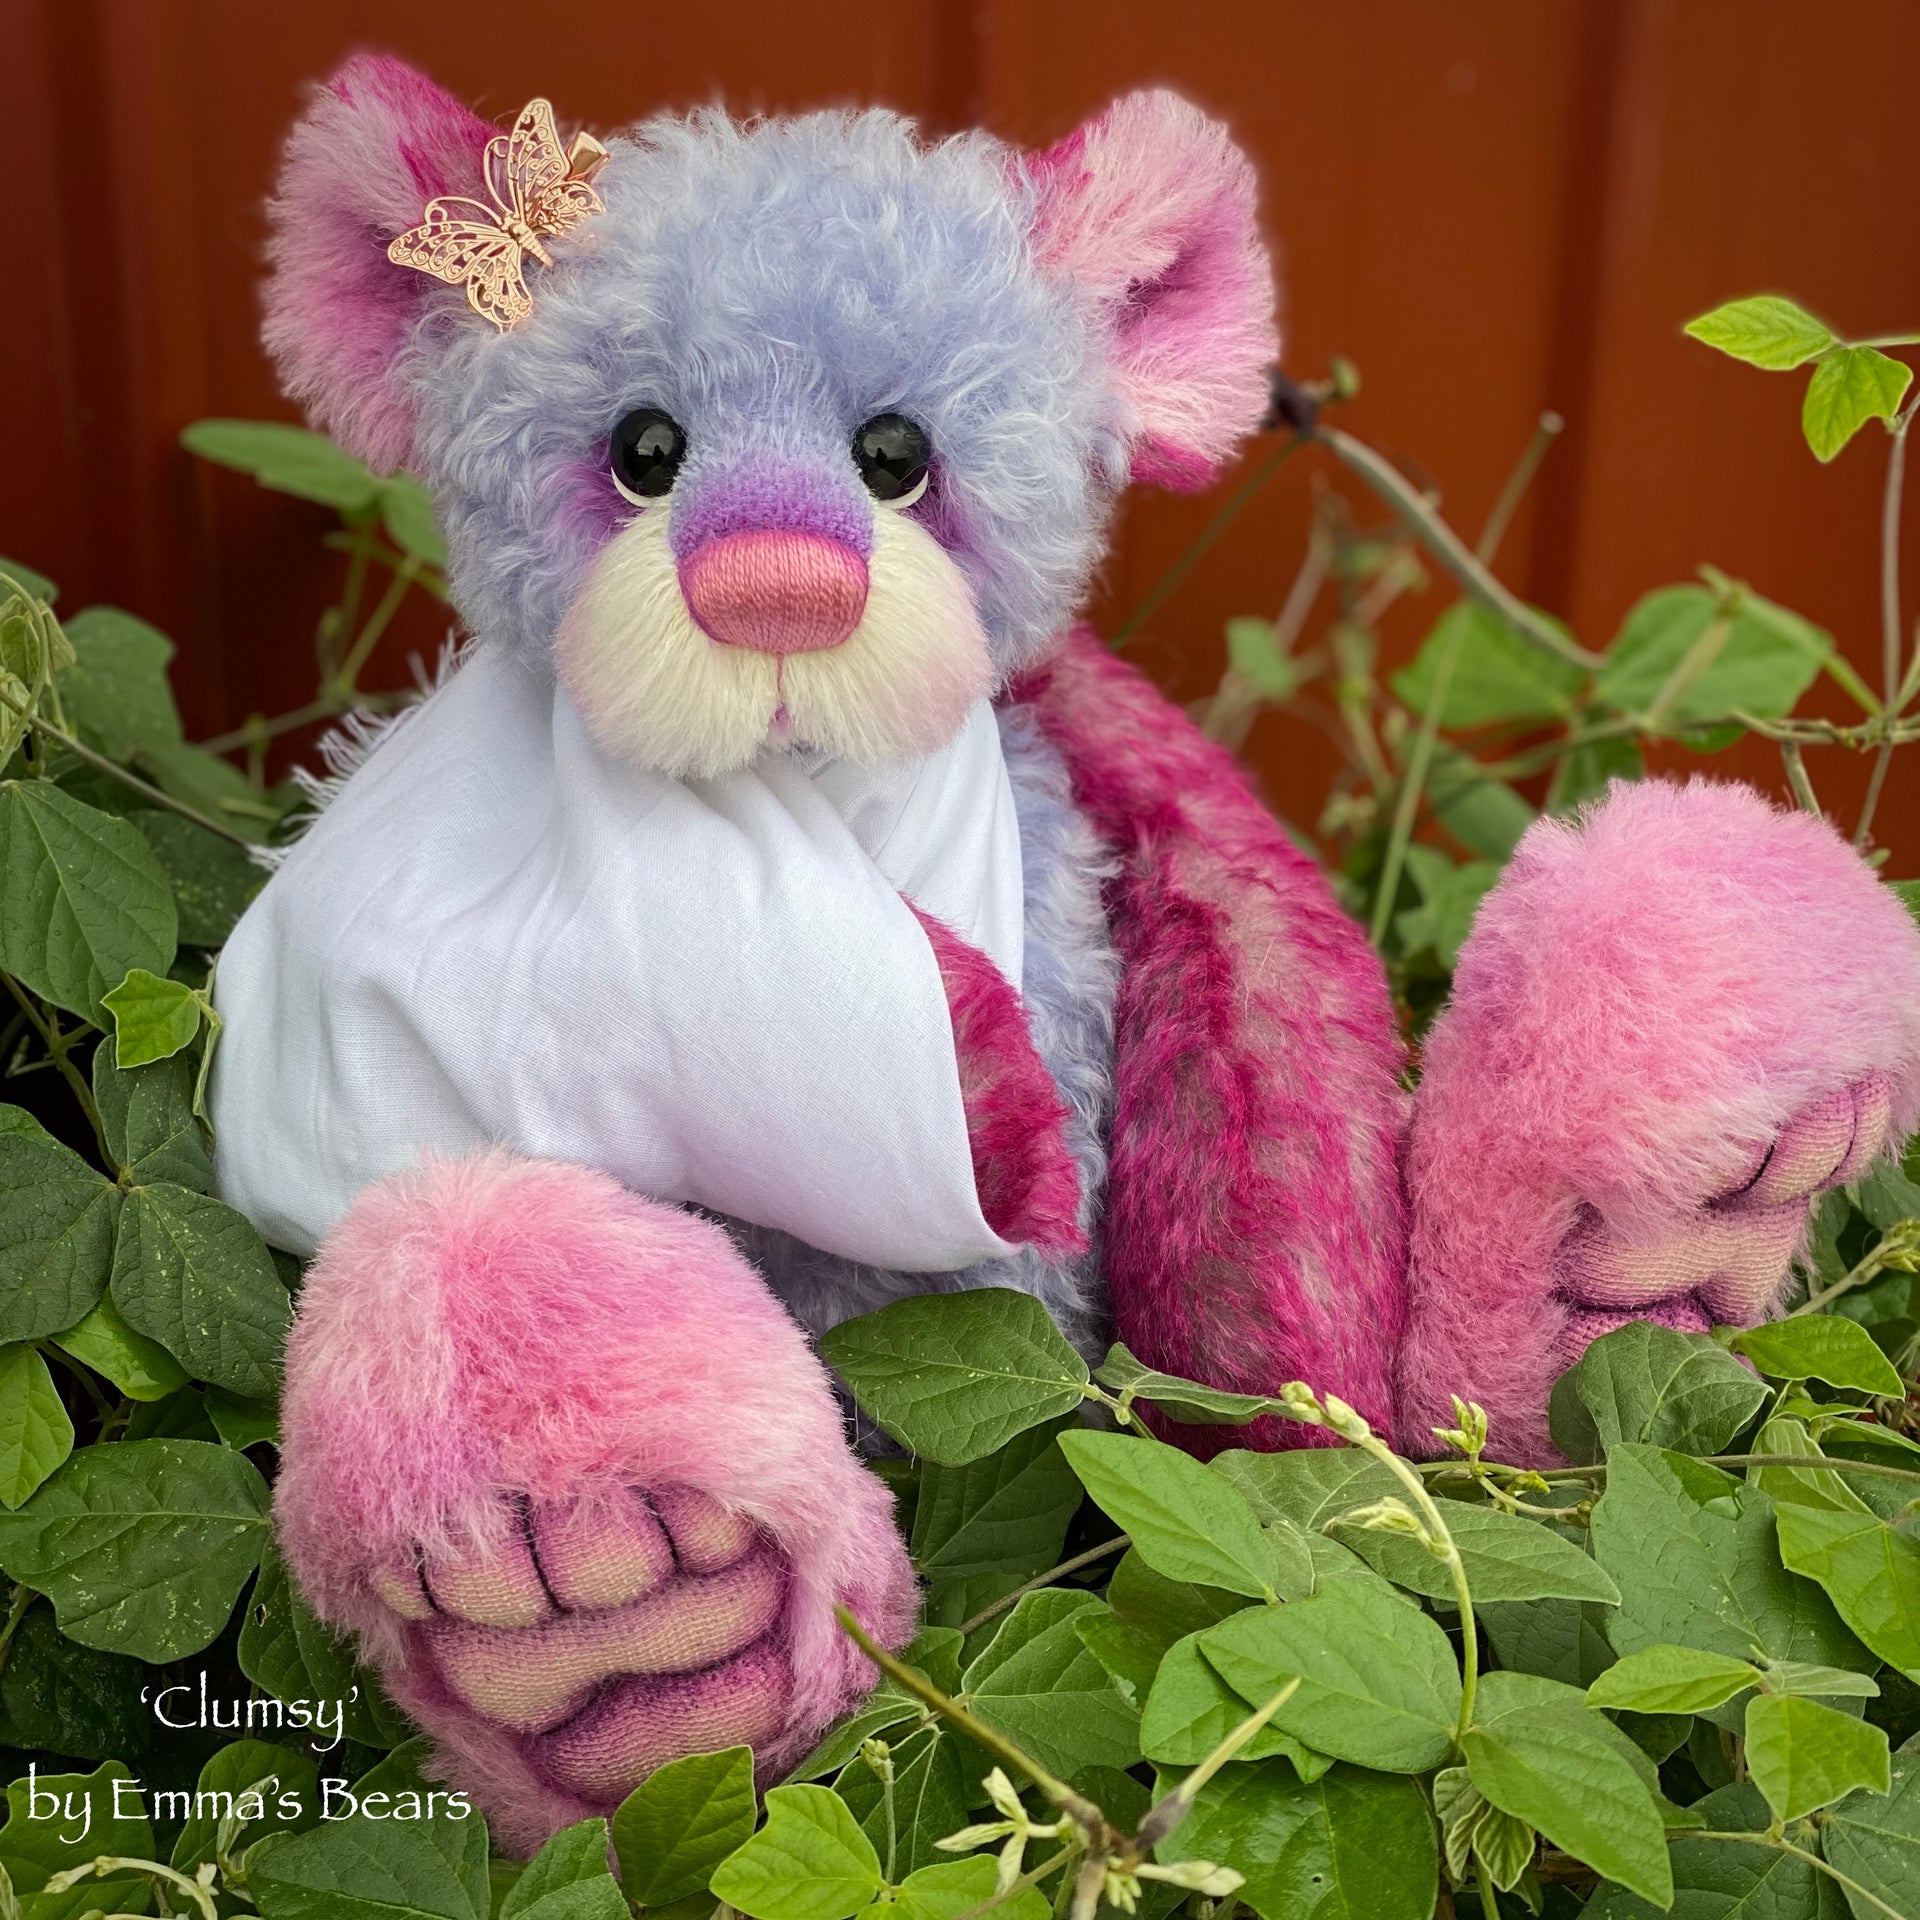 Clumsy - 12" Hand-dyed Mohair and Alpaca Bear by Emma's Bears - OOAK